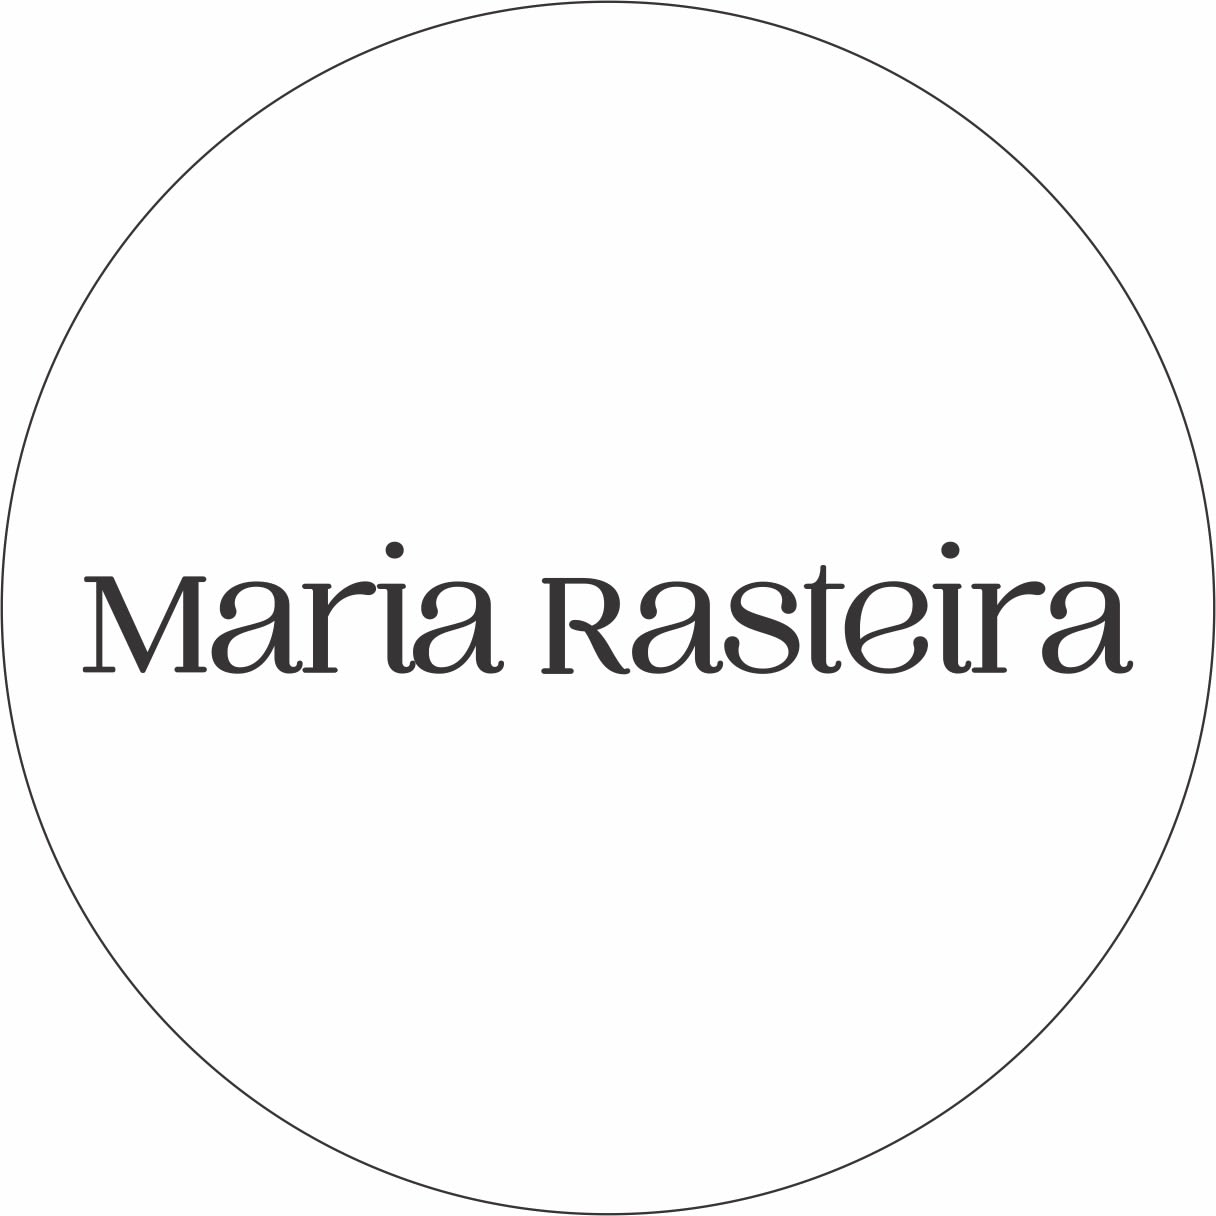 Maria Rasteira